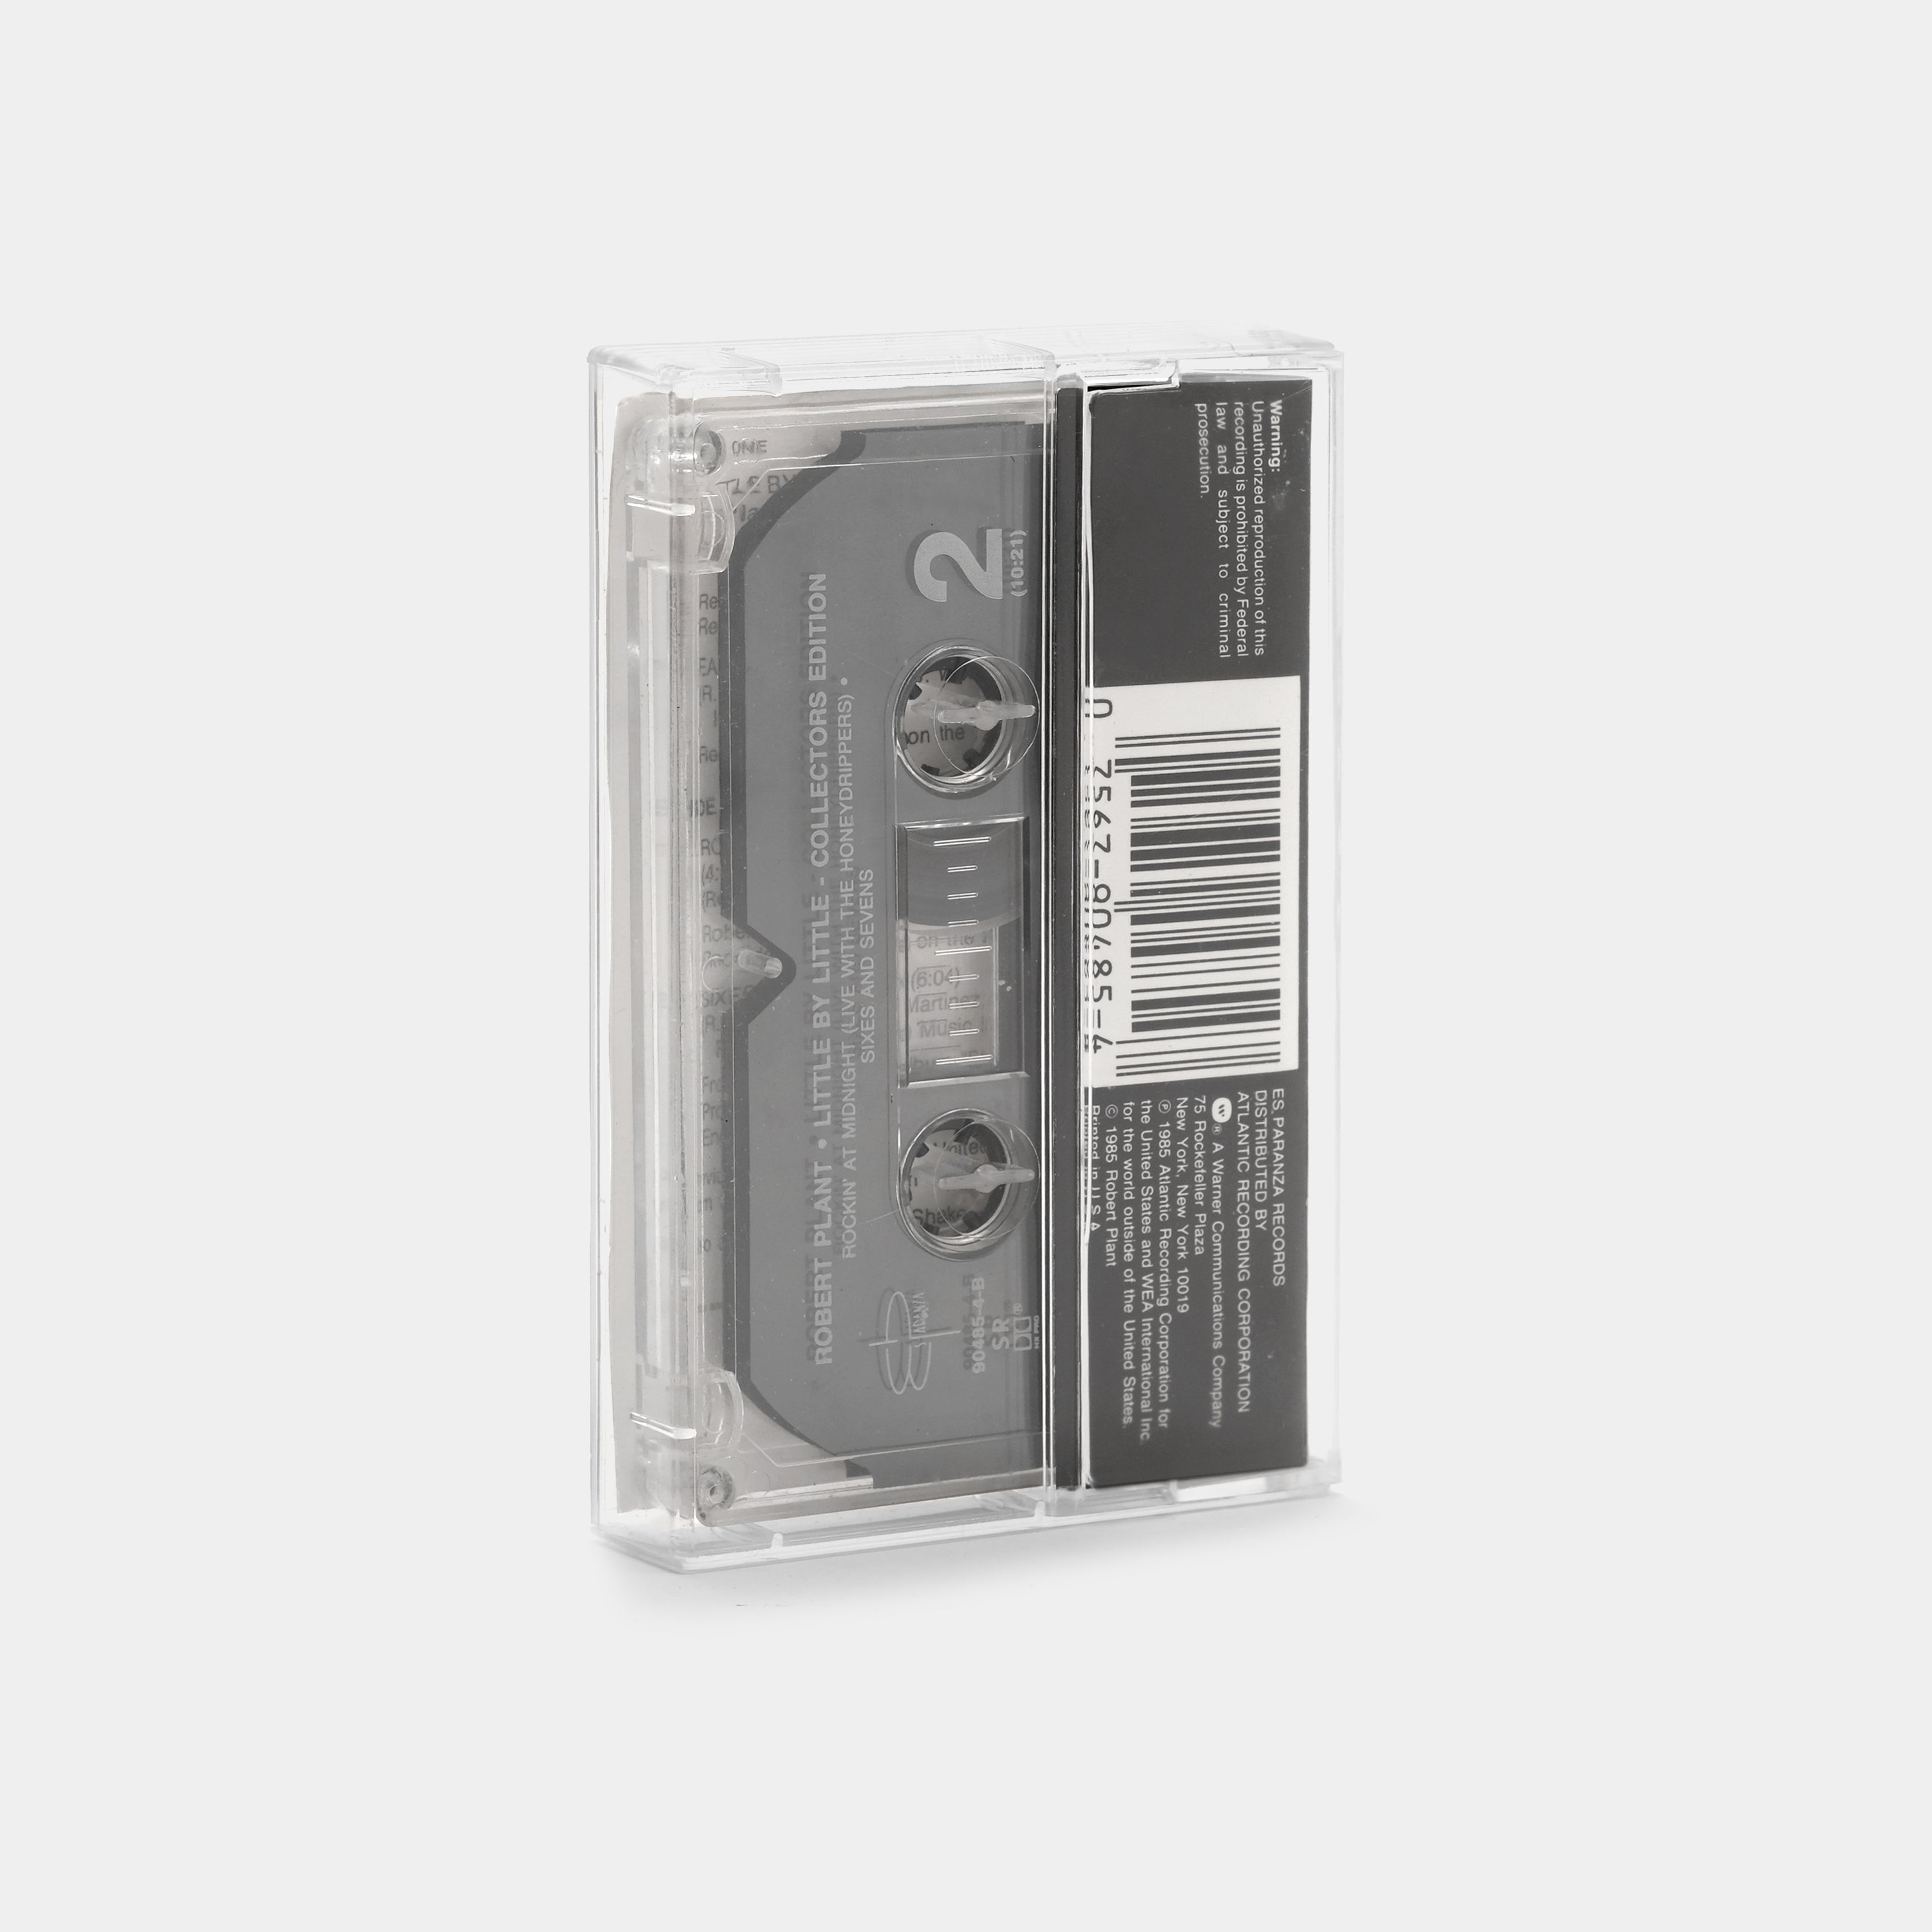 Robert Plant - Little By Little (Collectors Edition) Cassette Tape